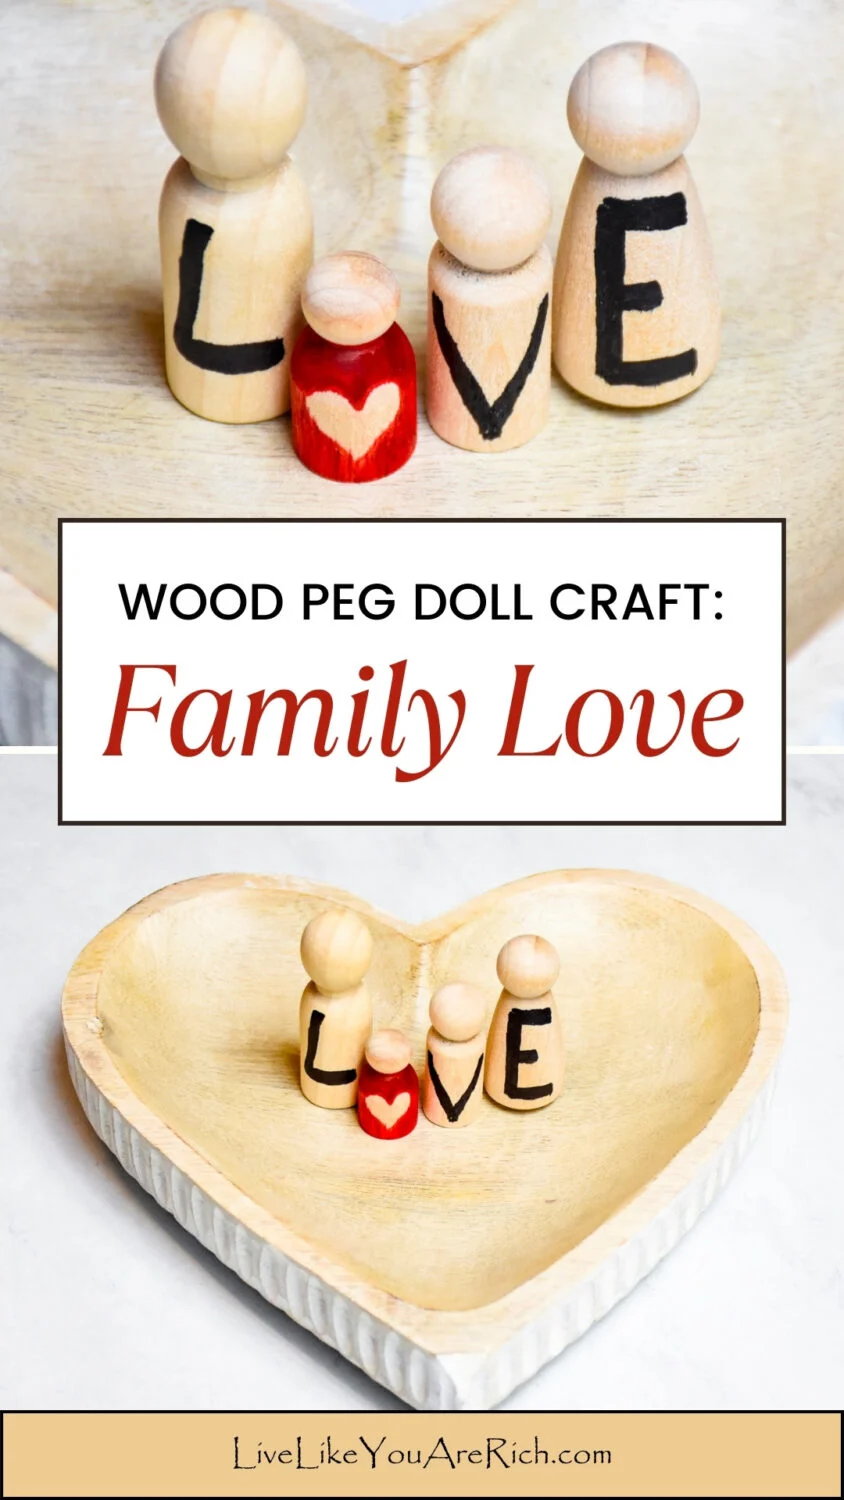 Wood Peg Doll Craft: Family Love